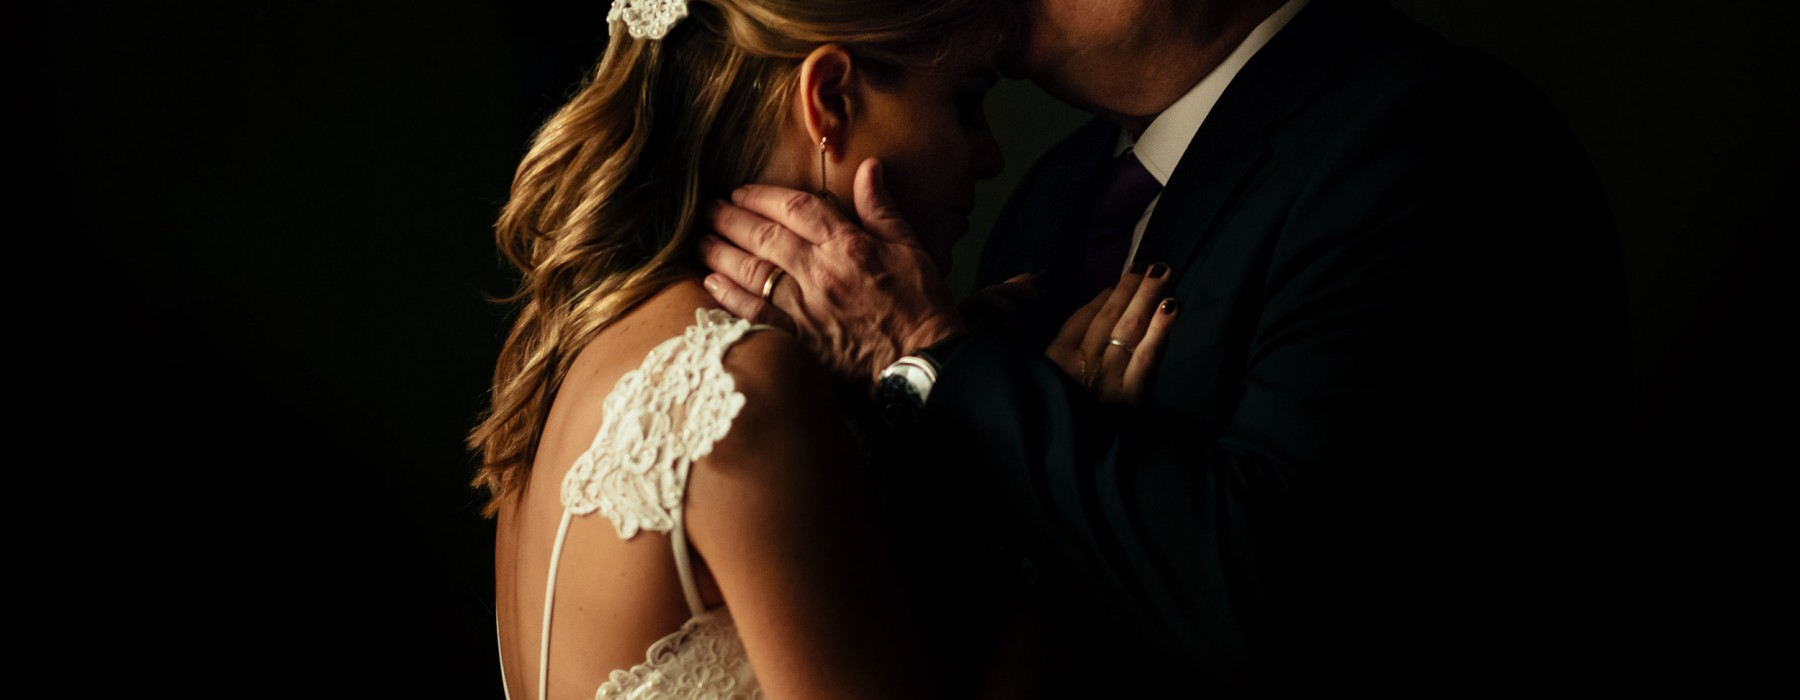 renato dpaula noiva pai beijo casamento emocao fotografia